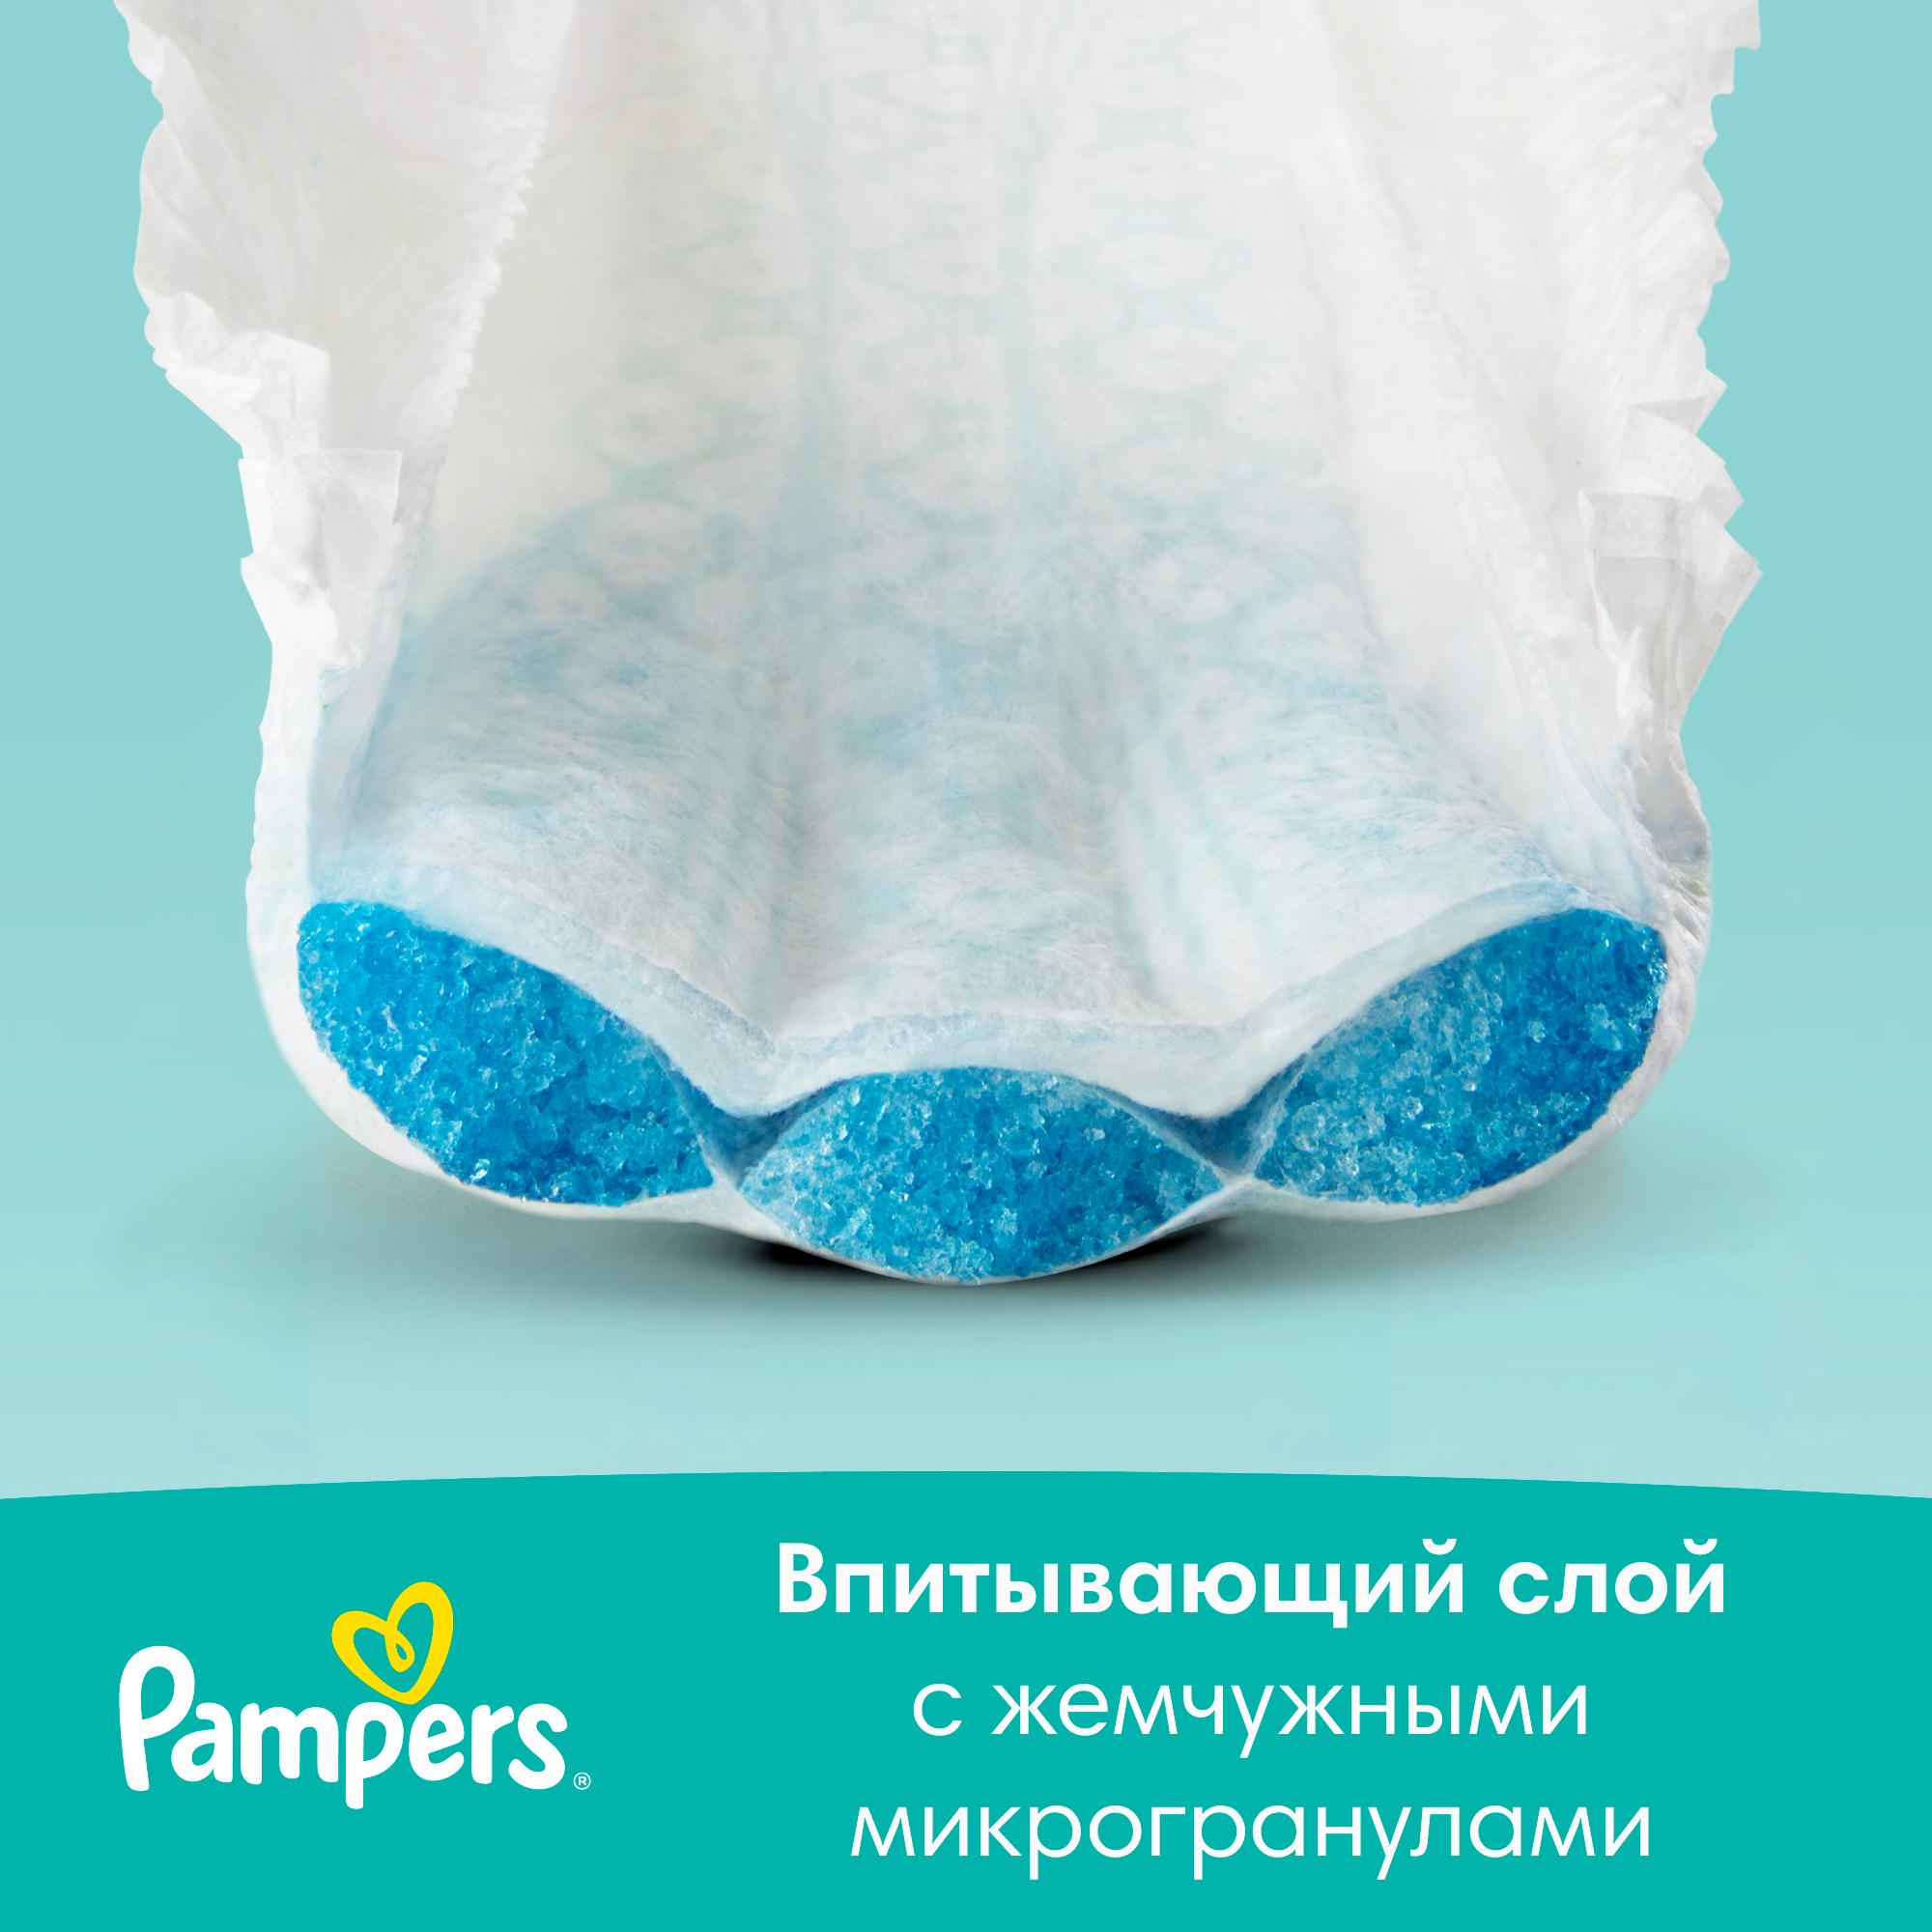 Подгузники Pampers New Baby-Dry 1 2-5кг 94шт - фото 3